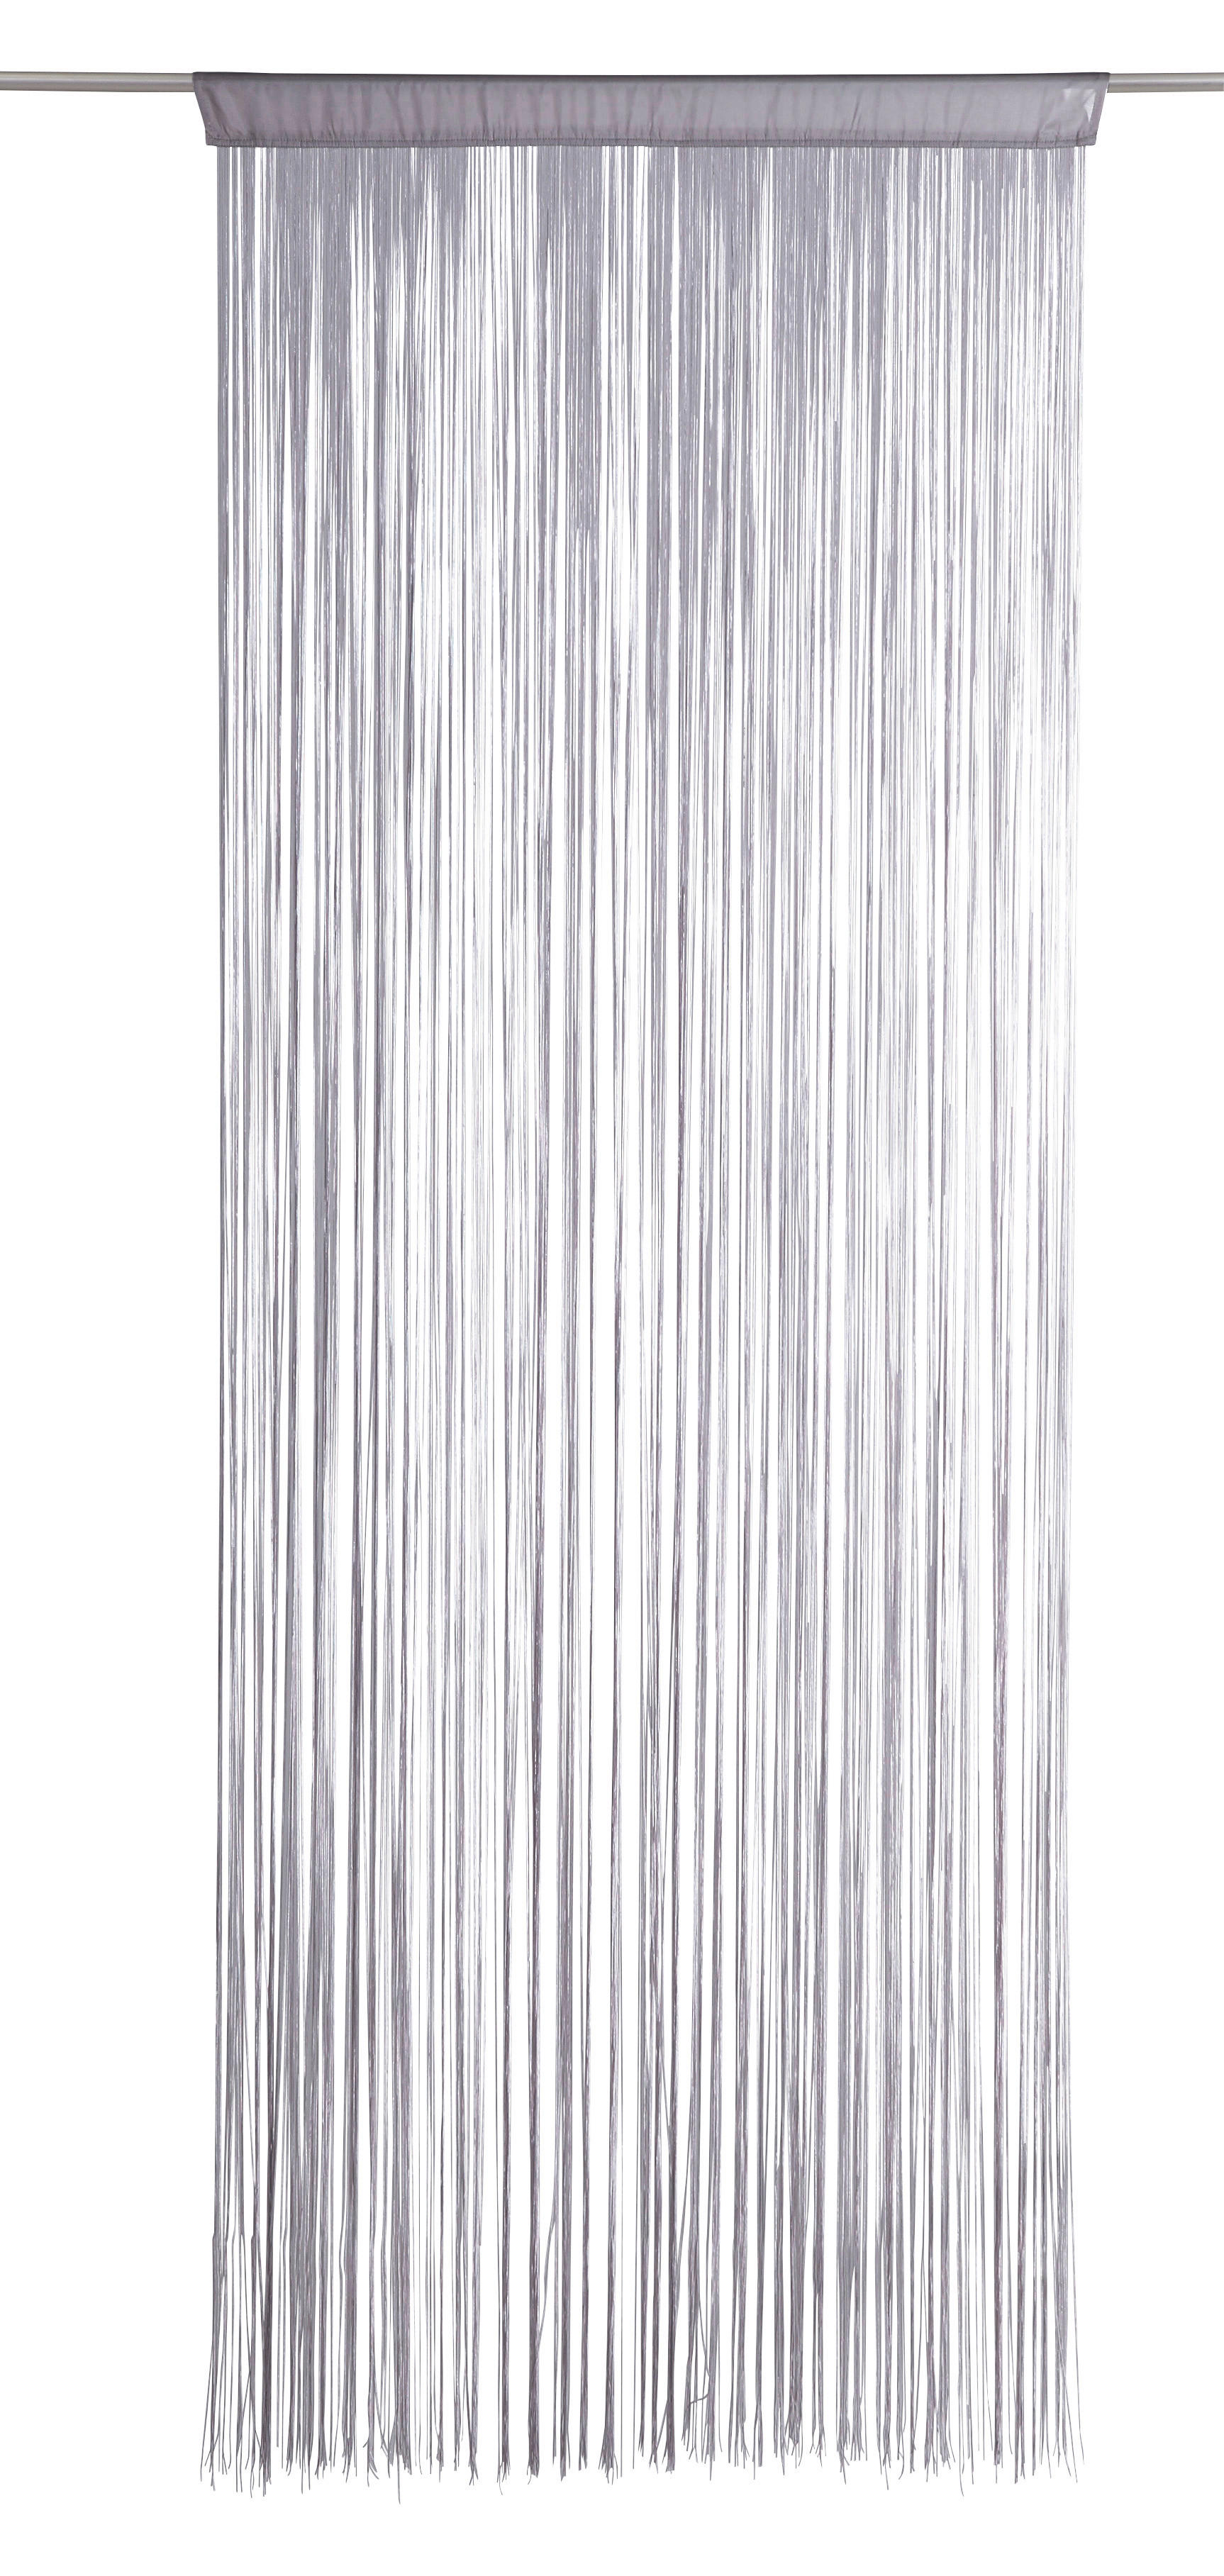 Boxxx PROVÁZKOVÝ ZÁVĚS, barvy stříbra, 90/245 cm - barvy stříbra